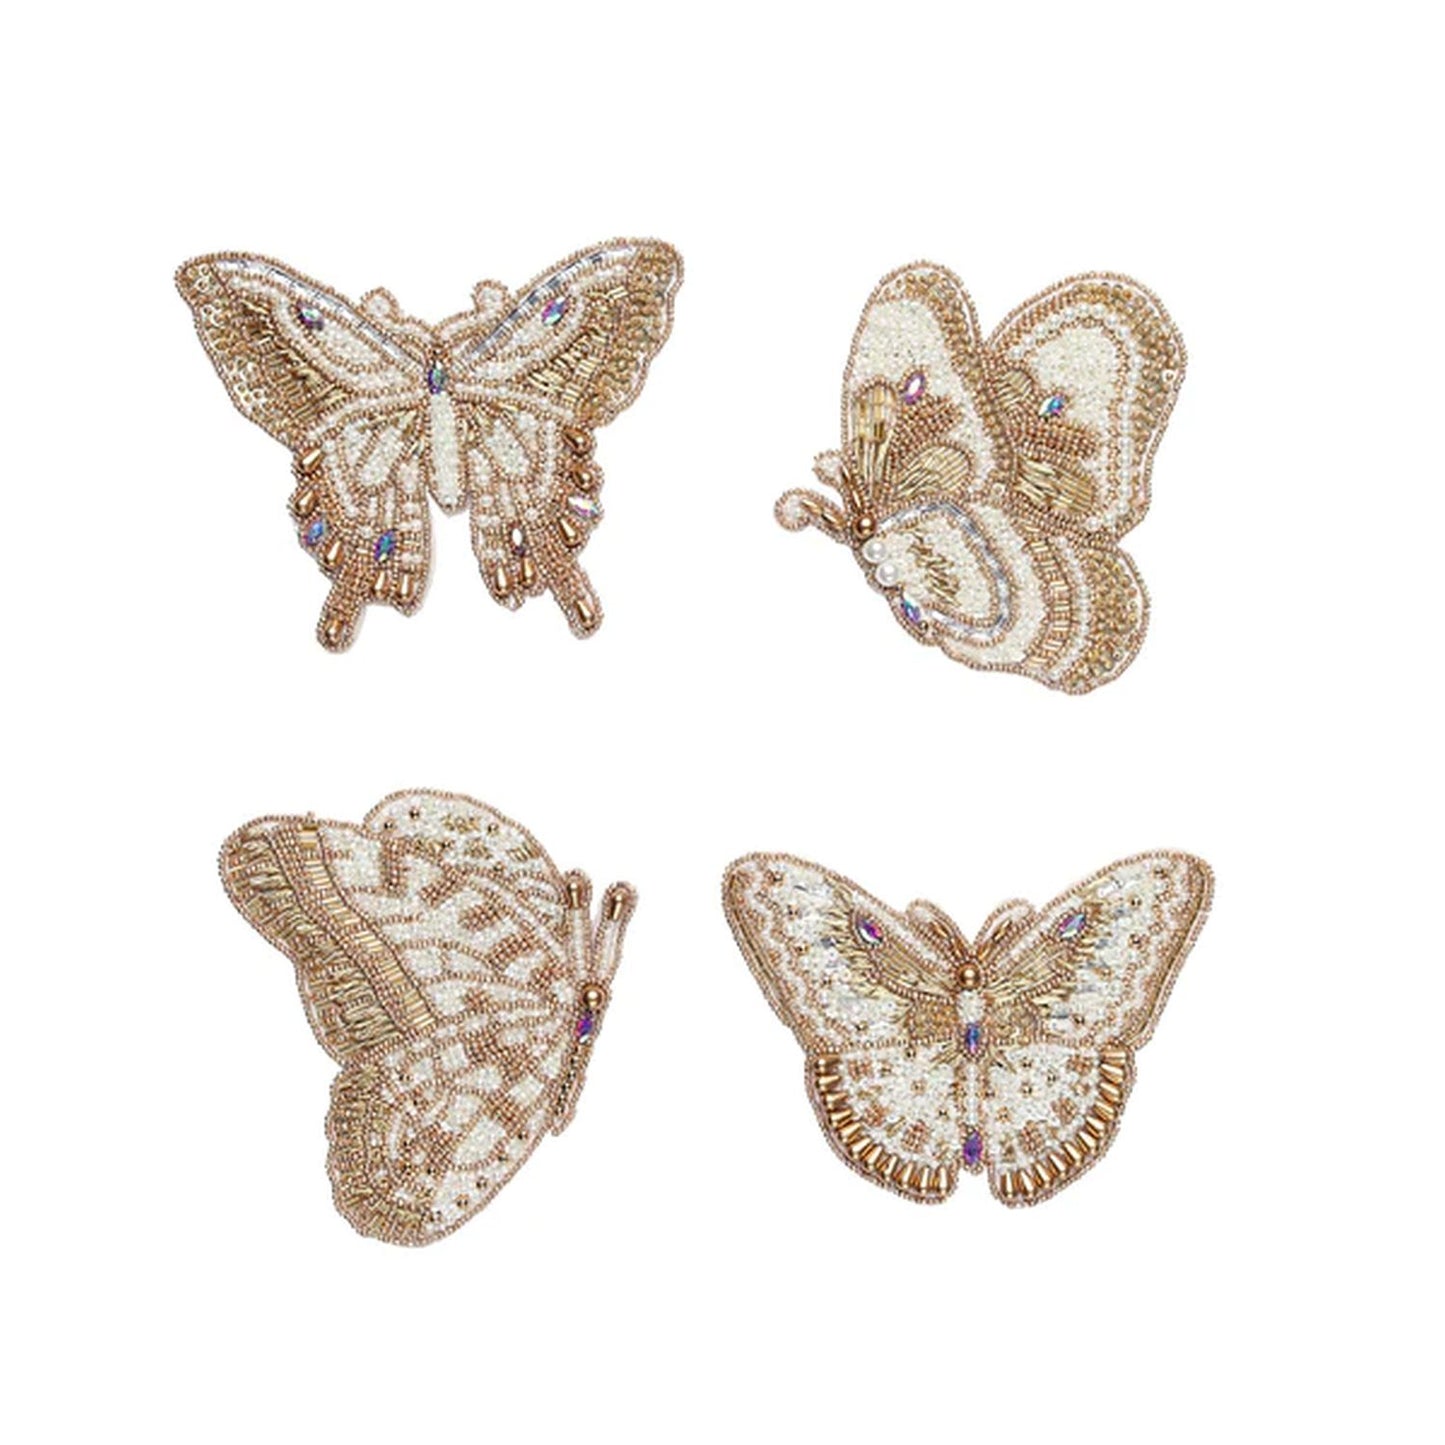 Kim Seybert Papillon Coasters in Ivory & Gold, Set of 4 in Gift Bag